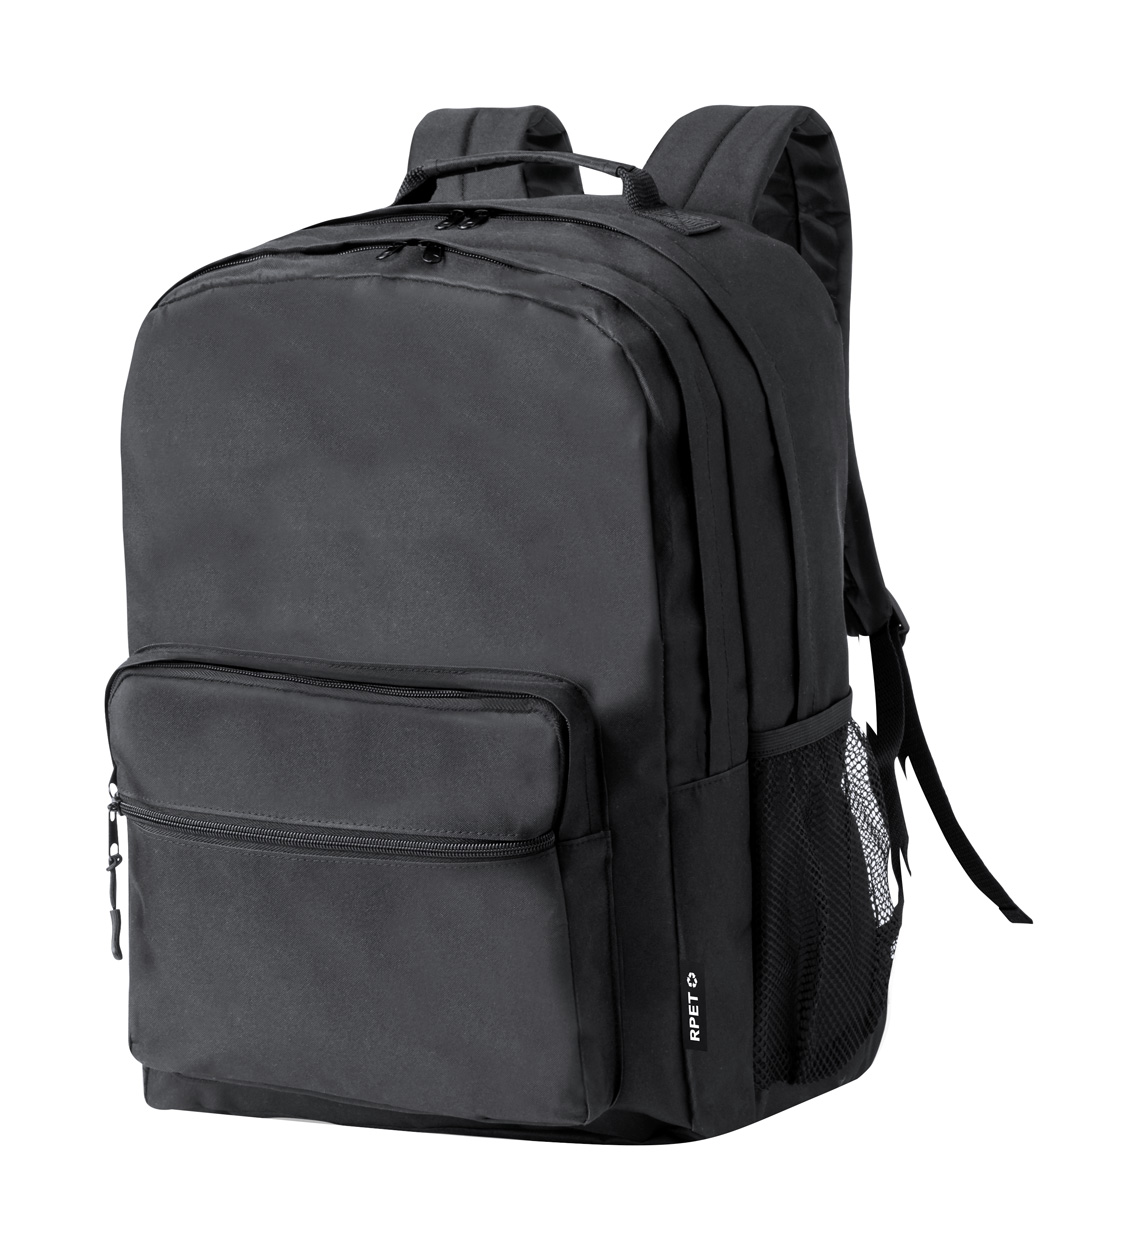 Bogart RPET backpack - black